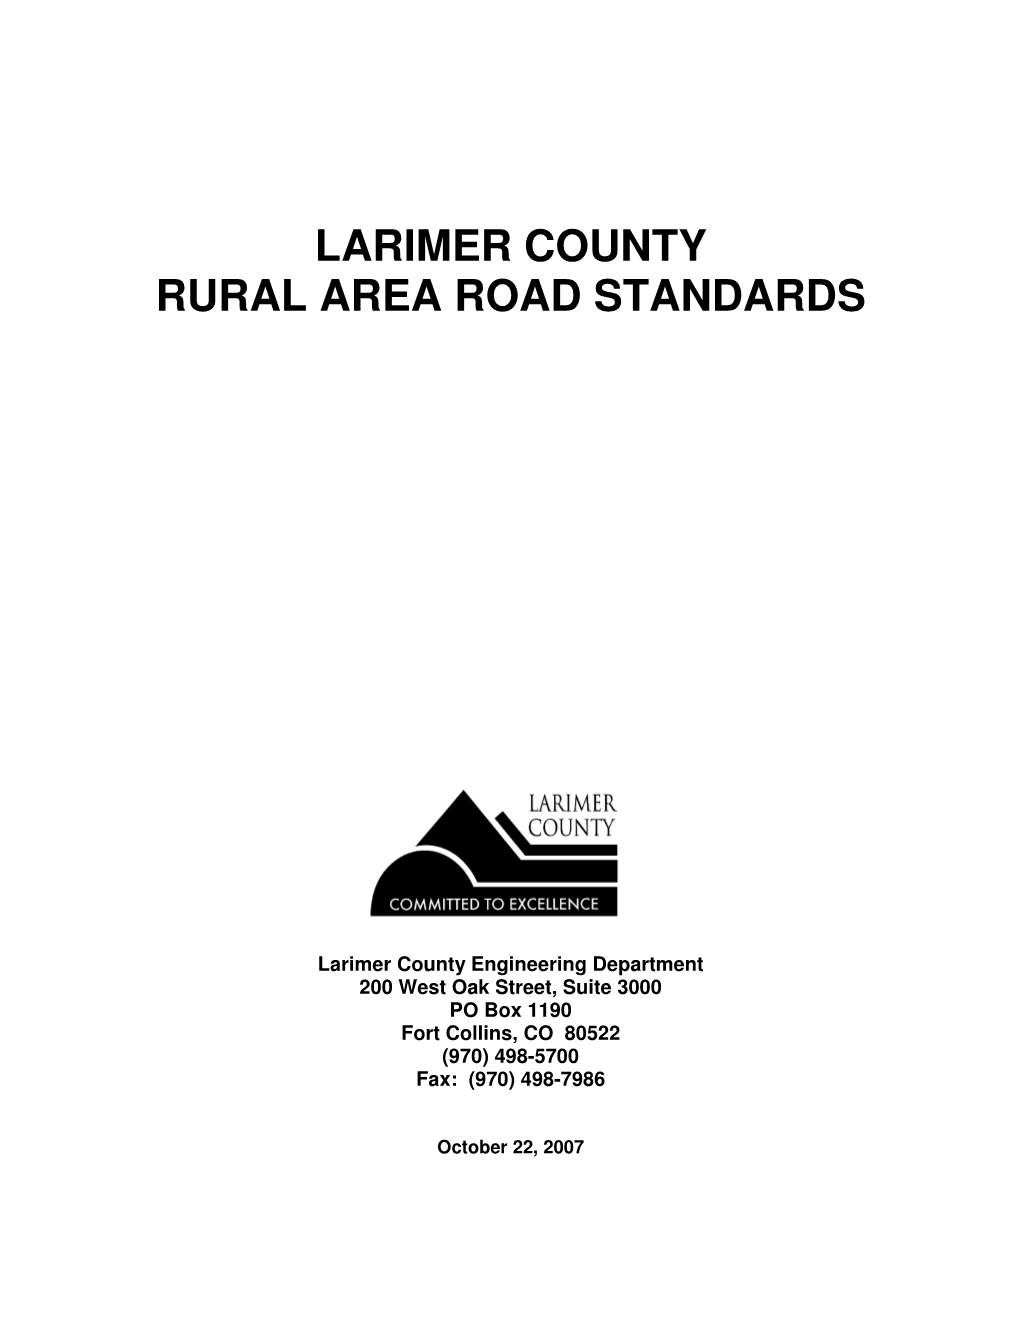 Larimer County Rural Area Road Standards